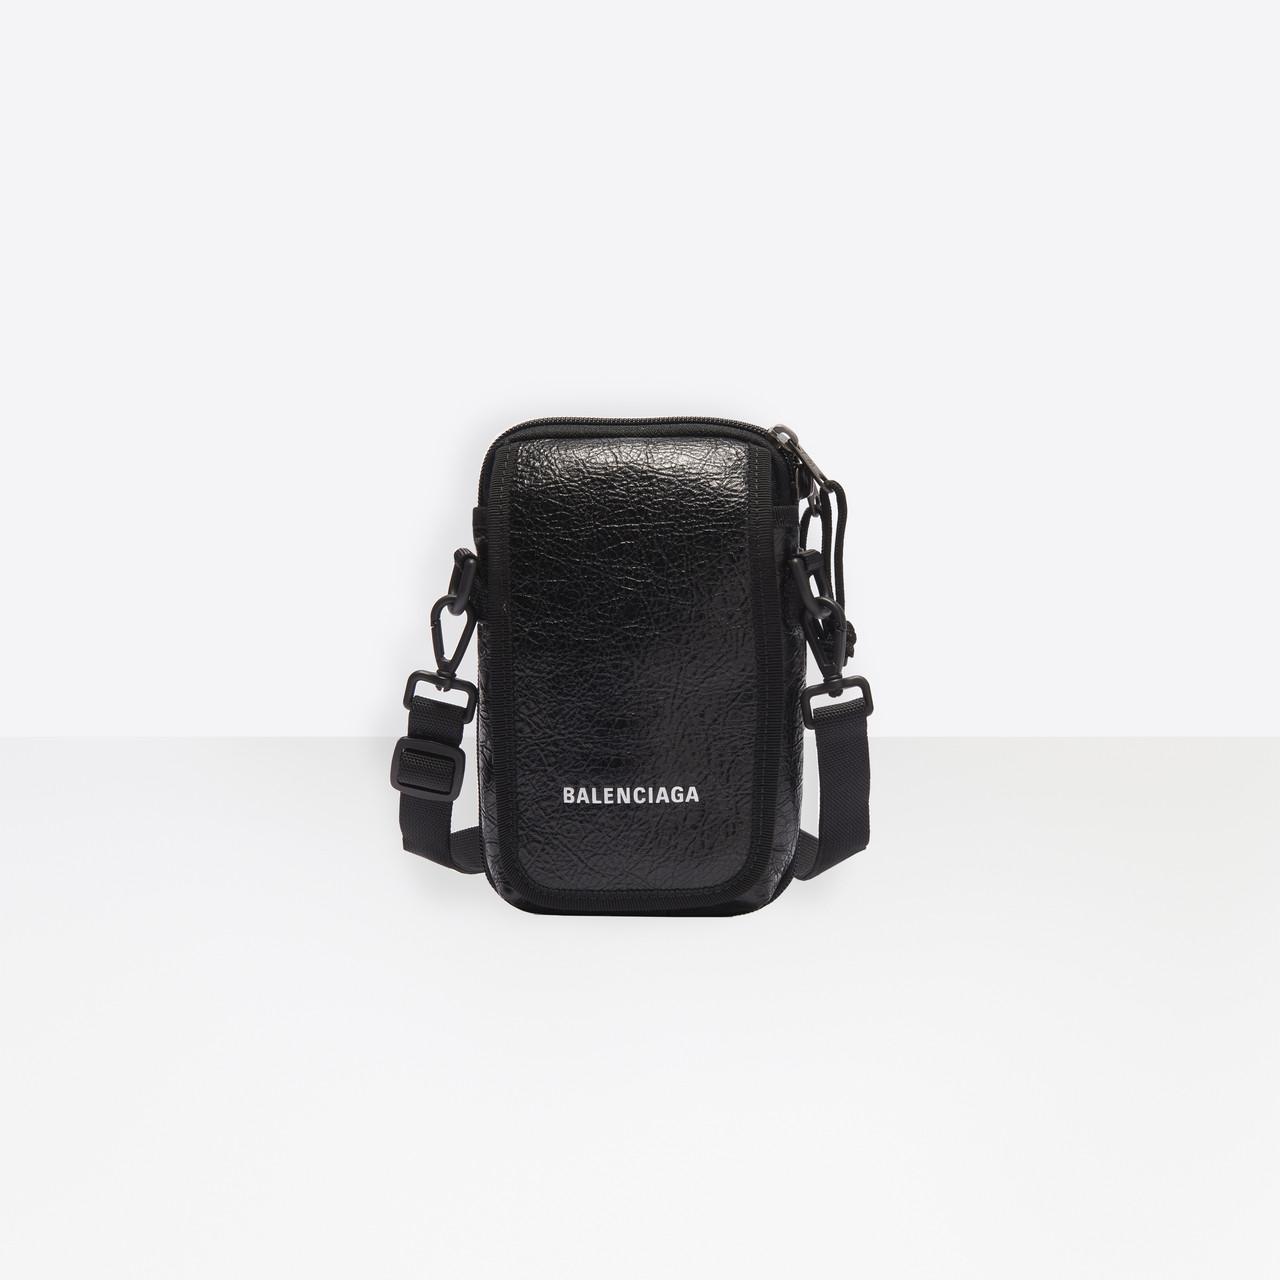 Balenciaga Leather Explorer Crossbody Pouch Bag in Black for Men - Lyst